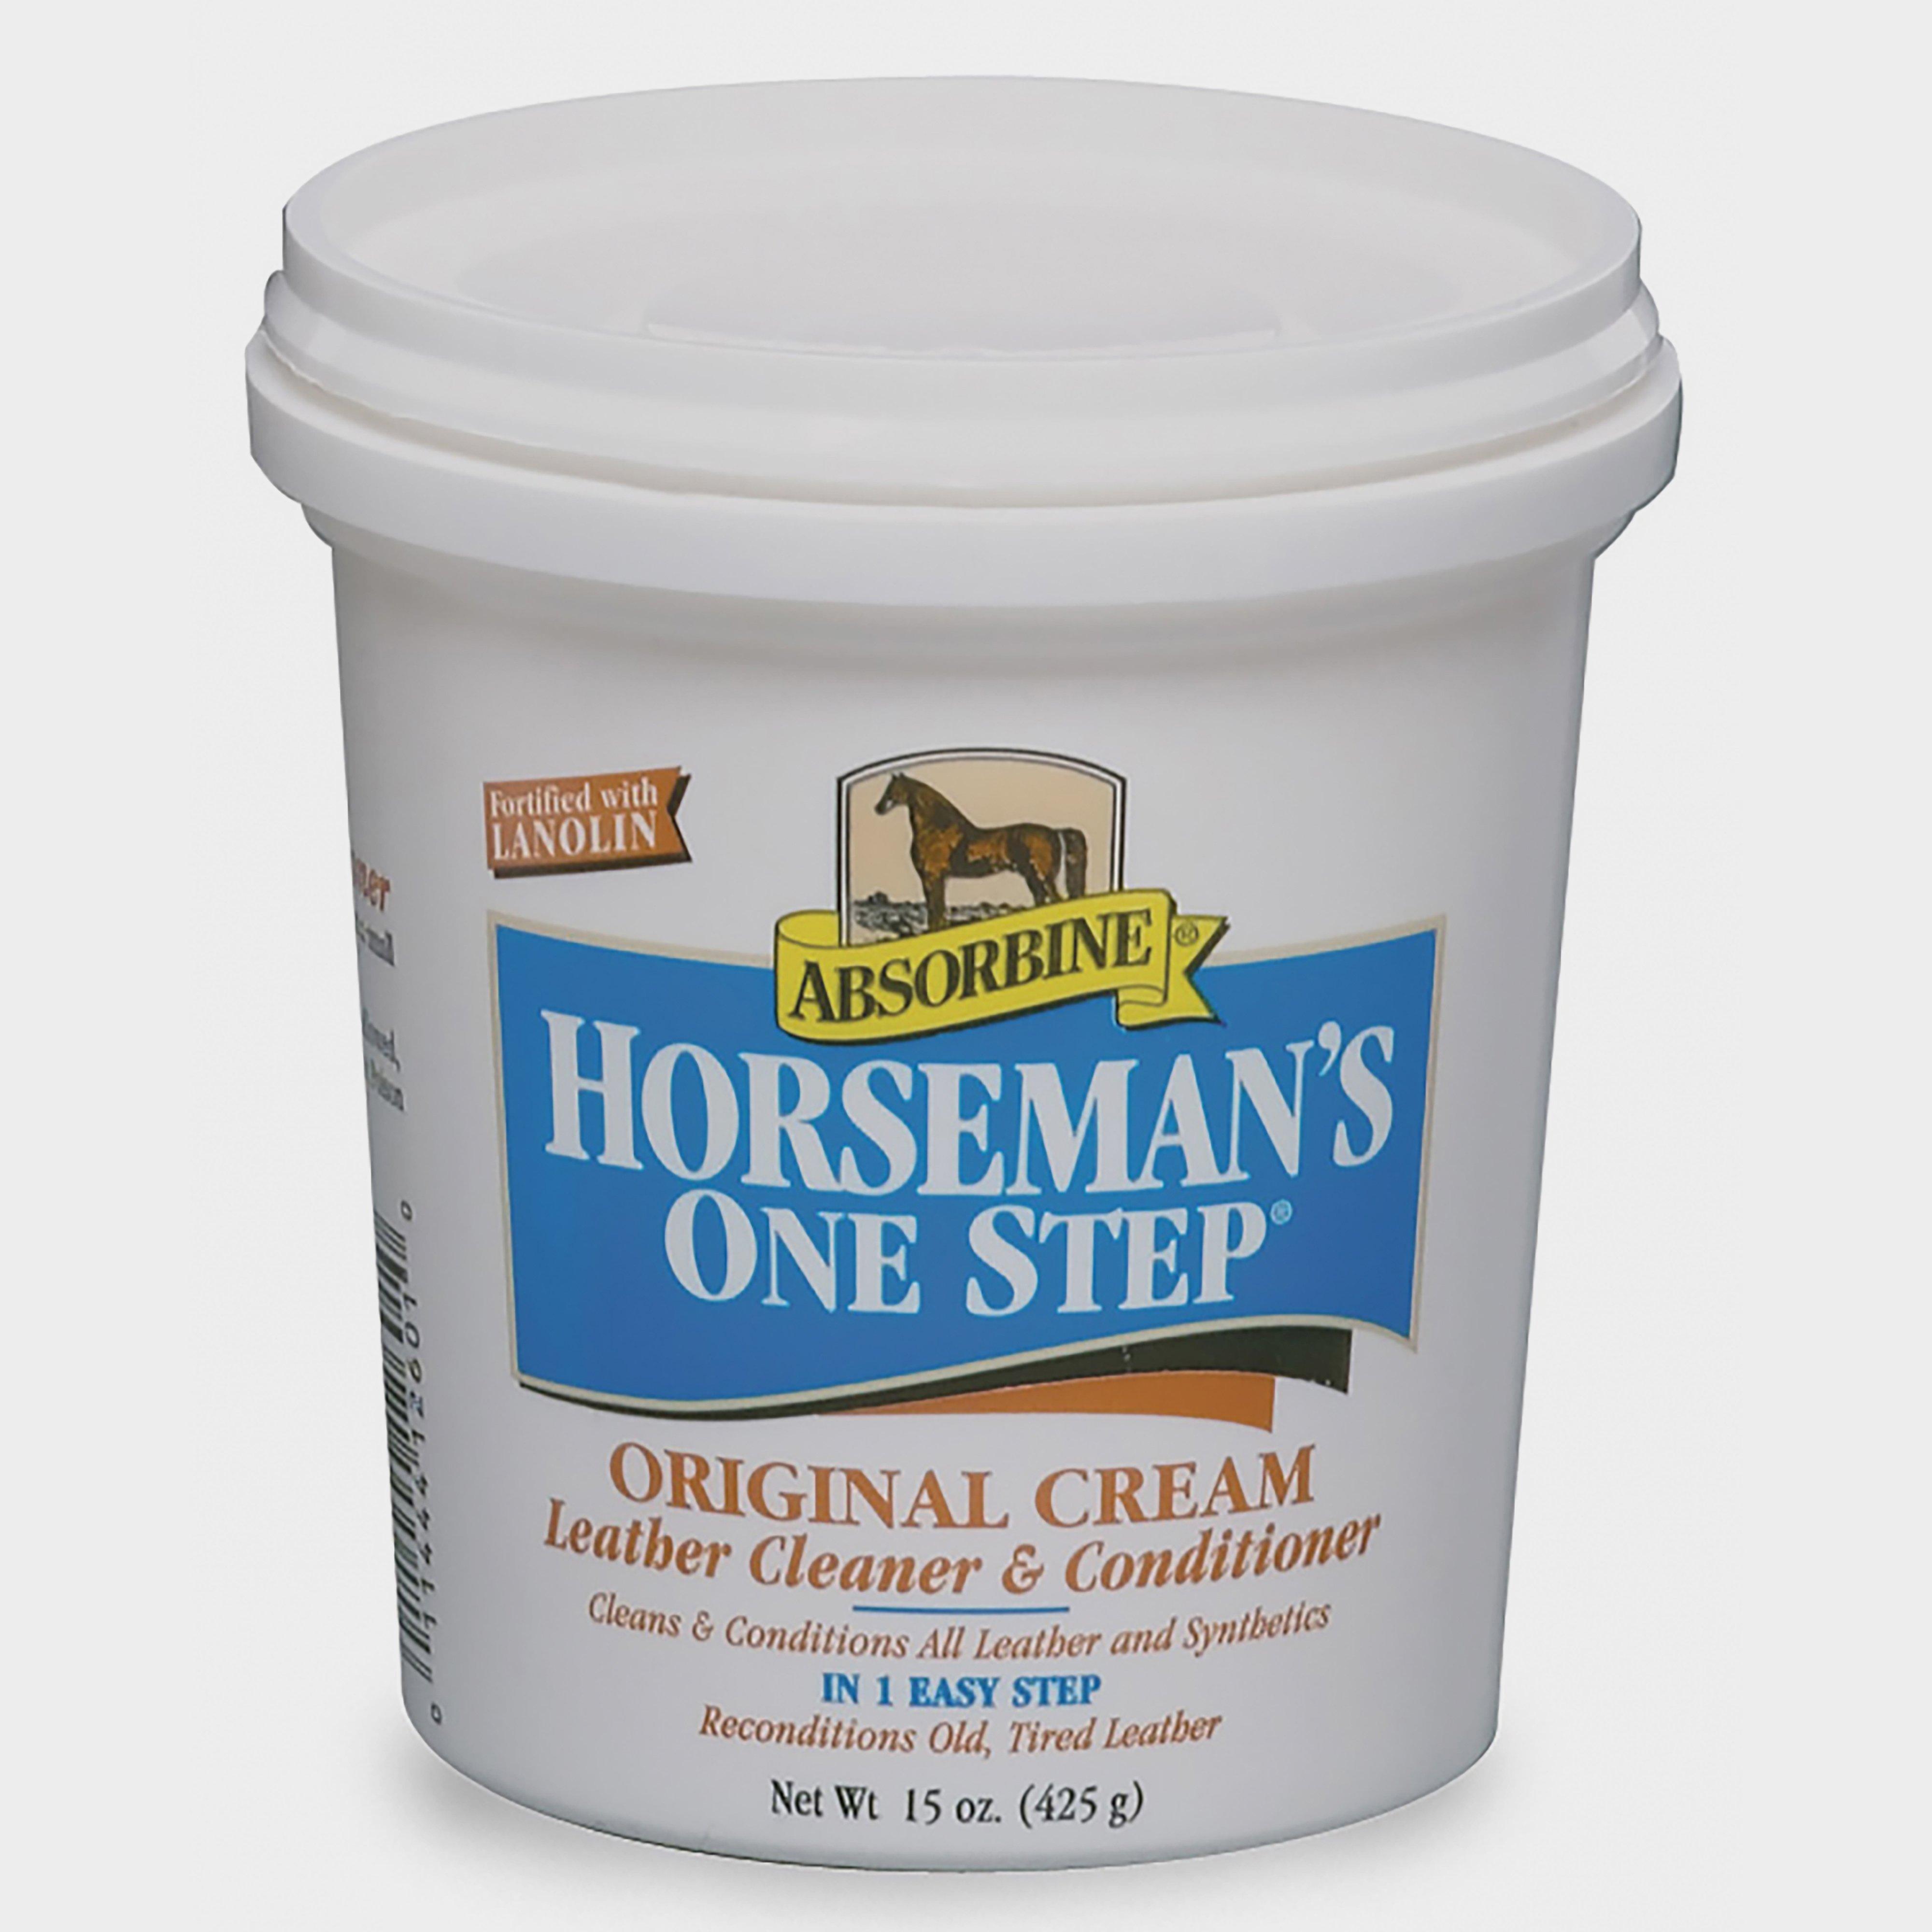 Horseman’s One Step Original Cream Leather Clean & Conditioner